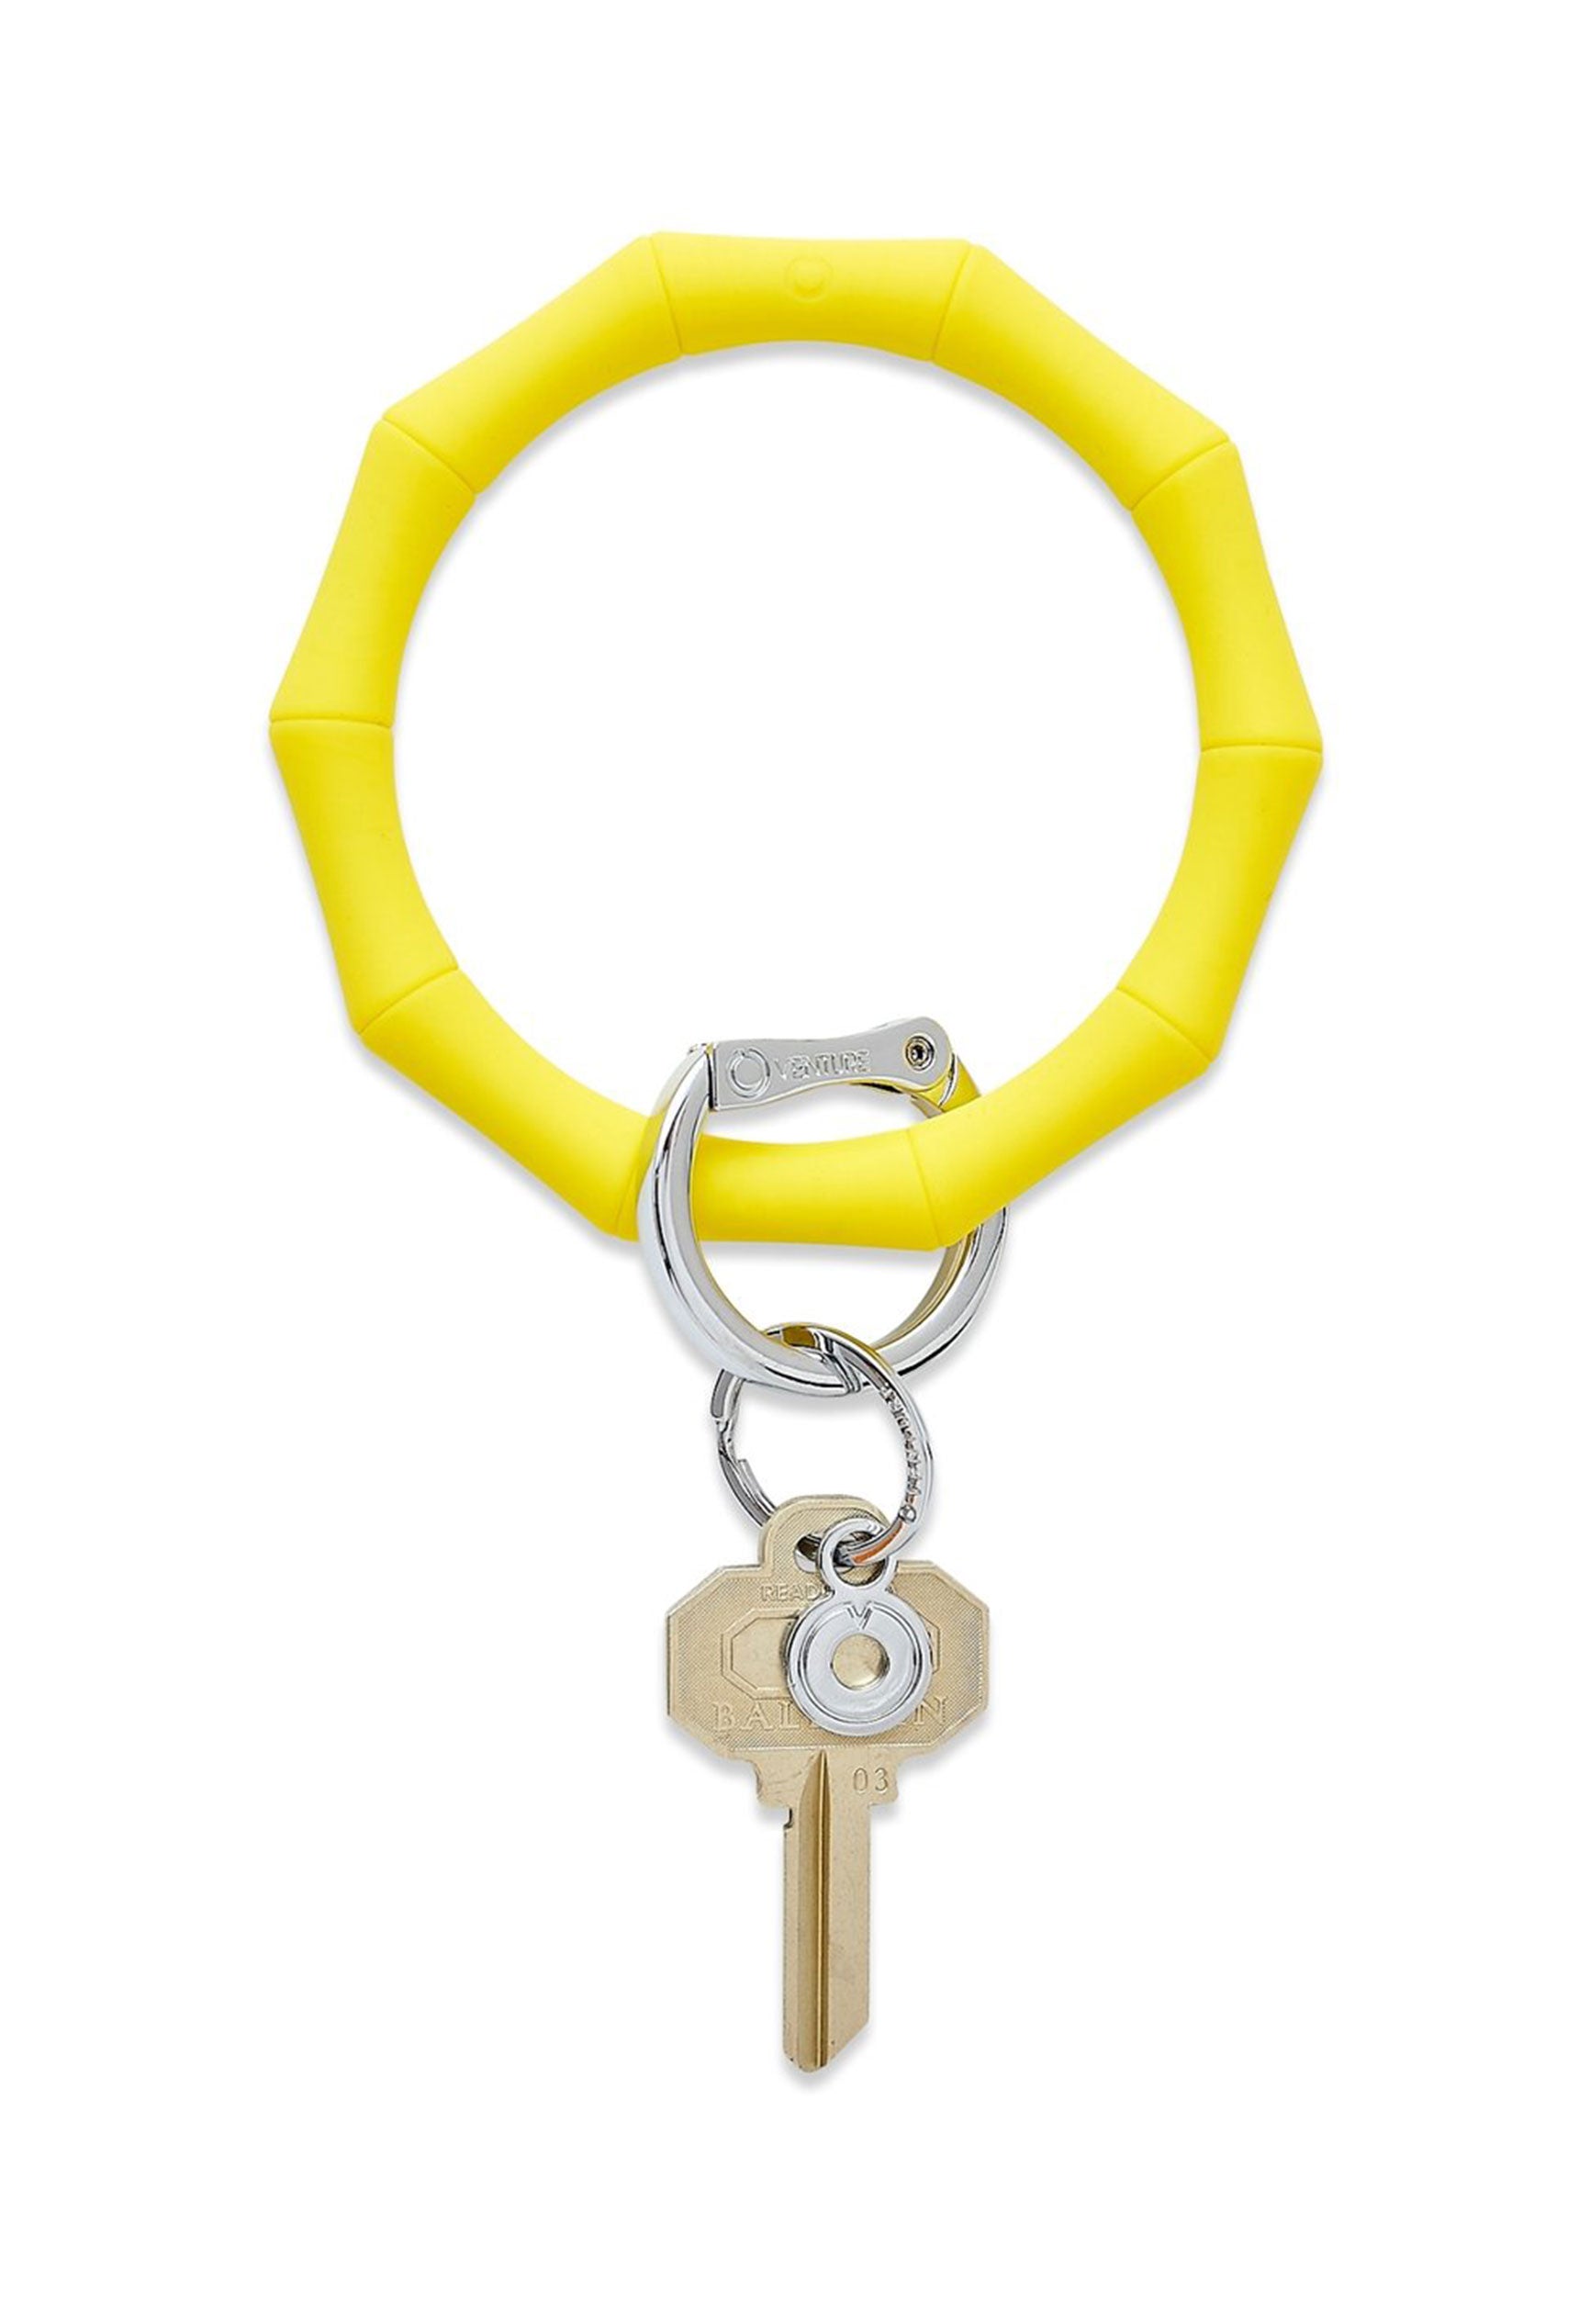 Silicone Big O® Key Ring - Yes Yellow Bamboo, bright yellow bamboo inspired silicone key ring 